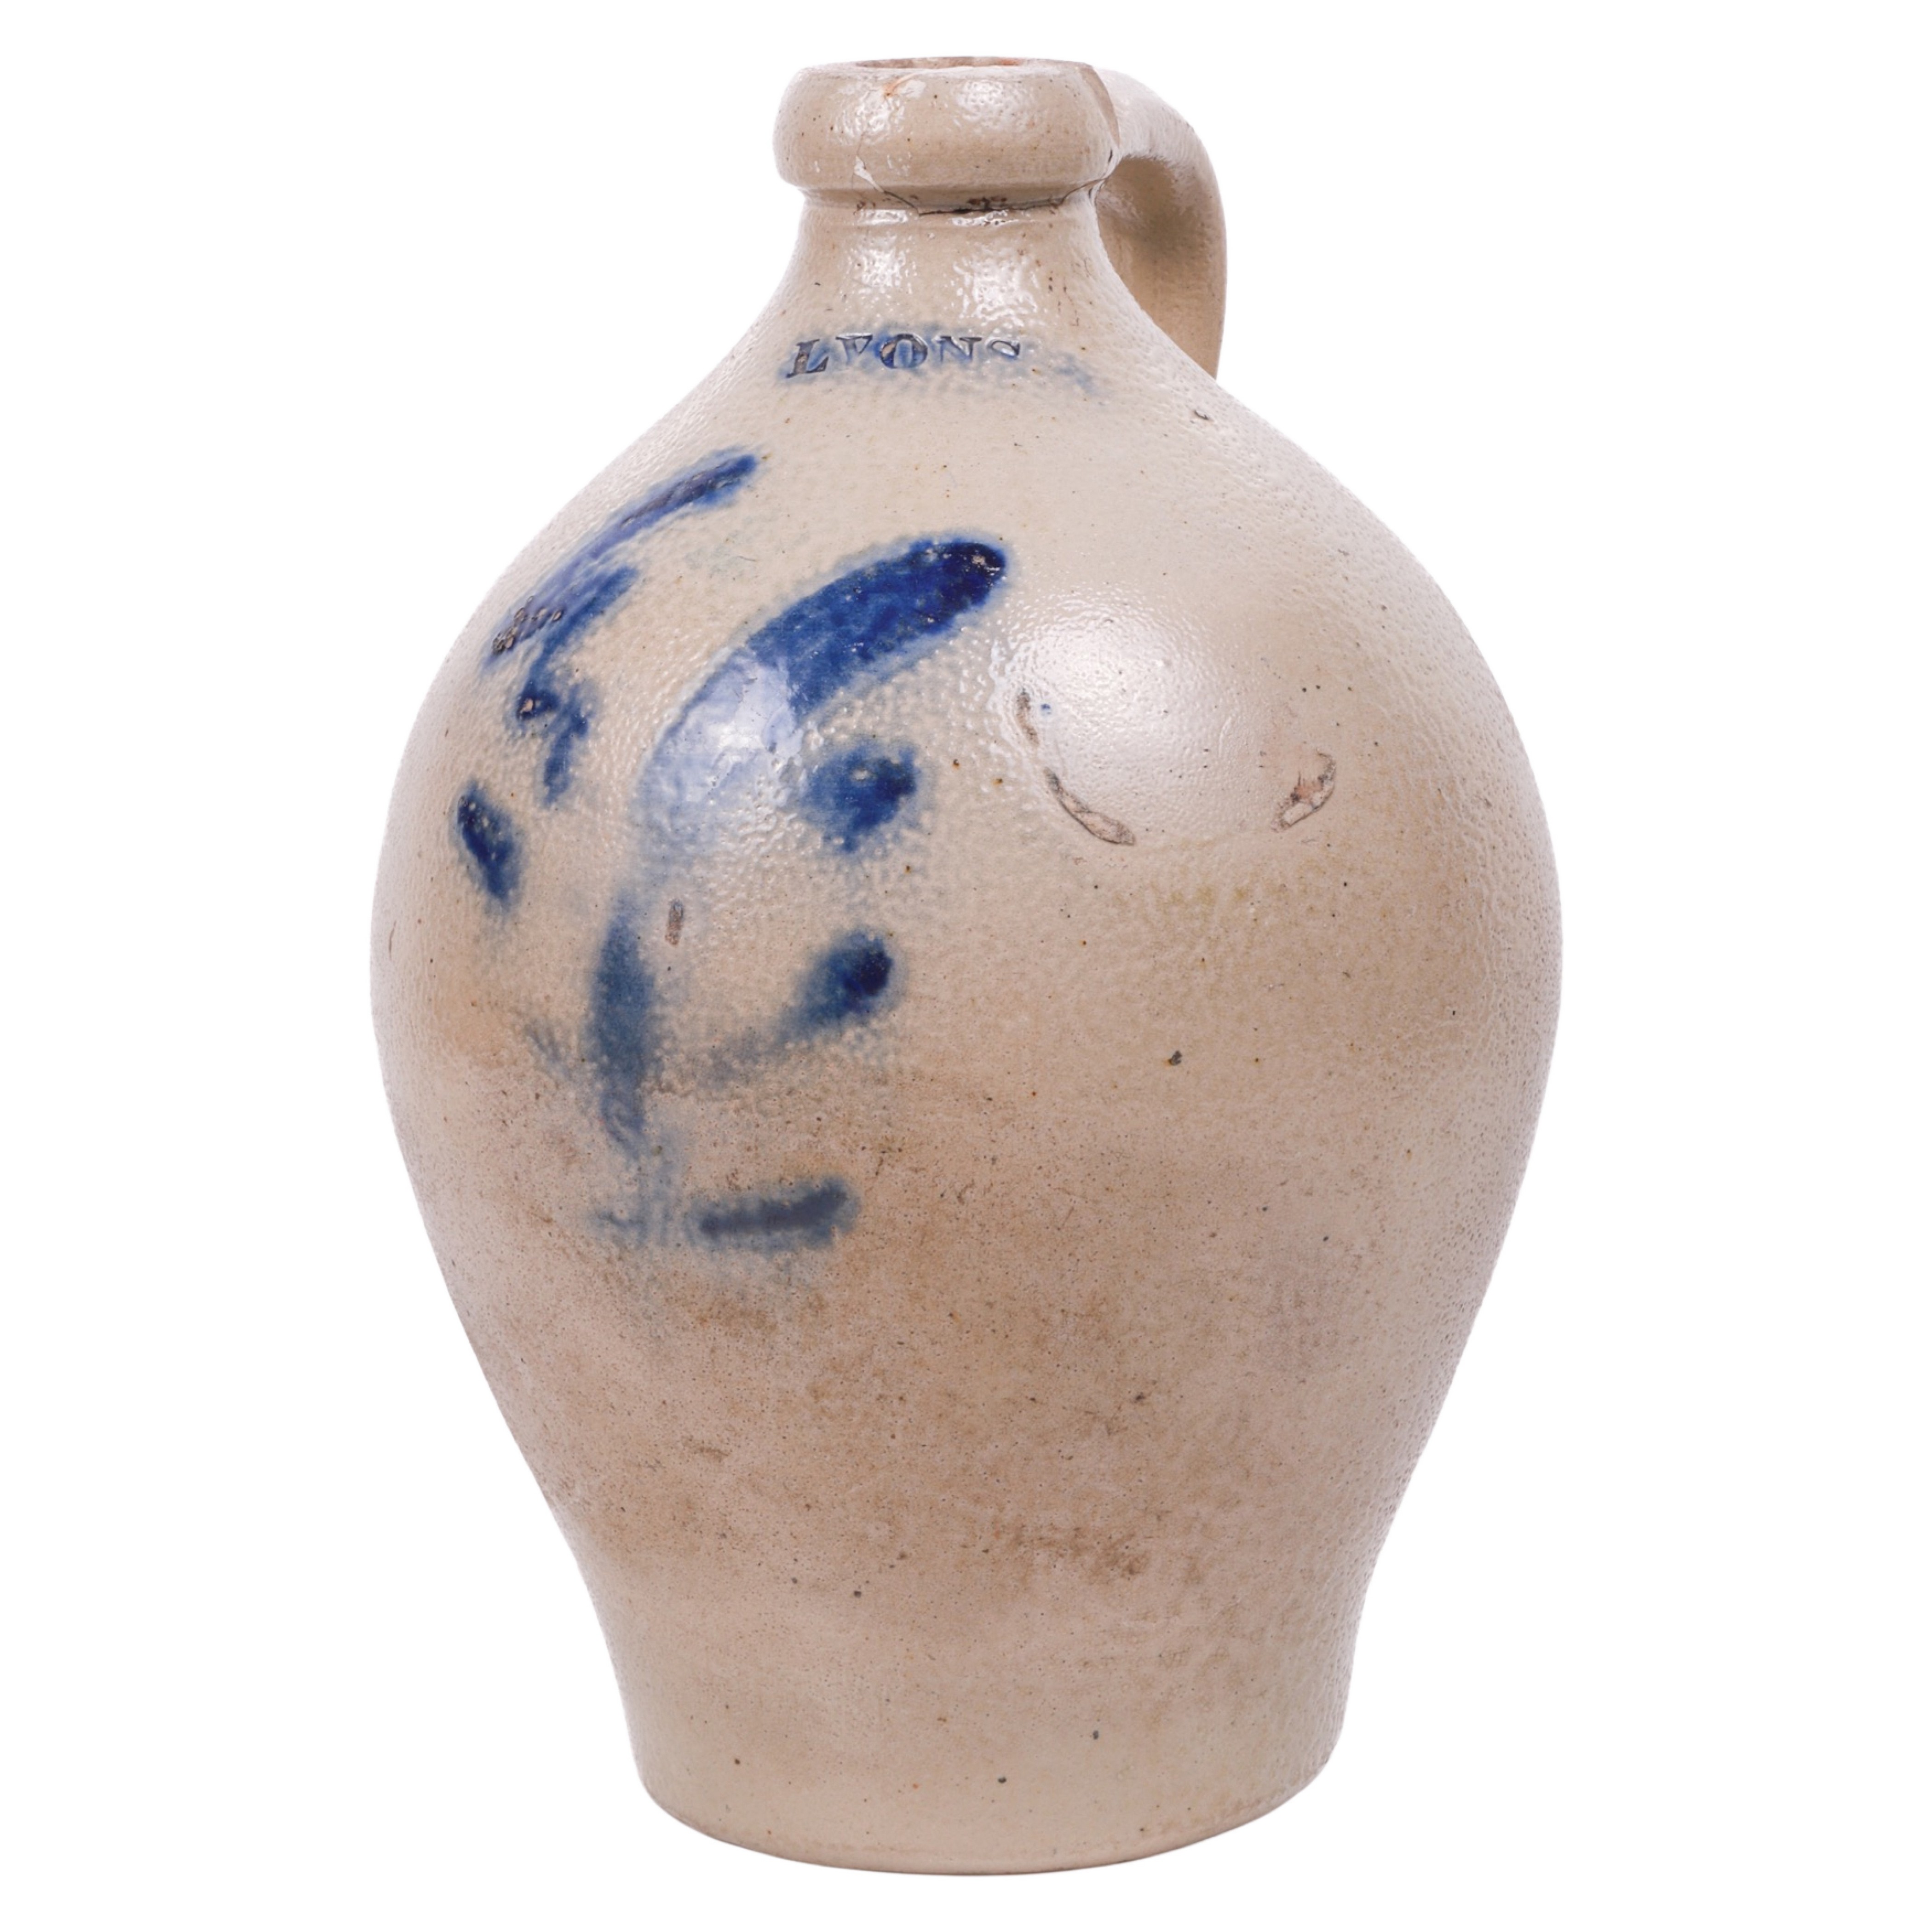 Lyons blue decorated stoneware jug,